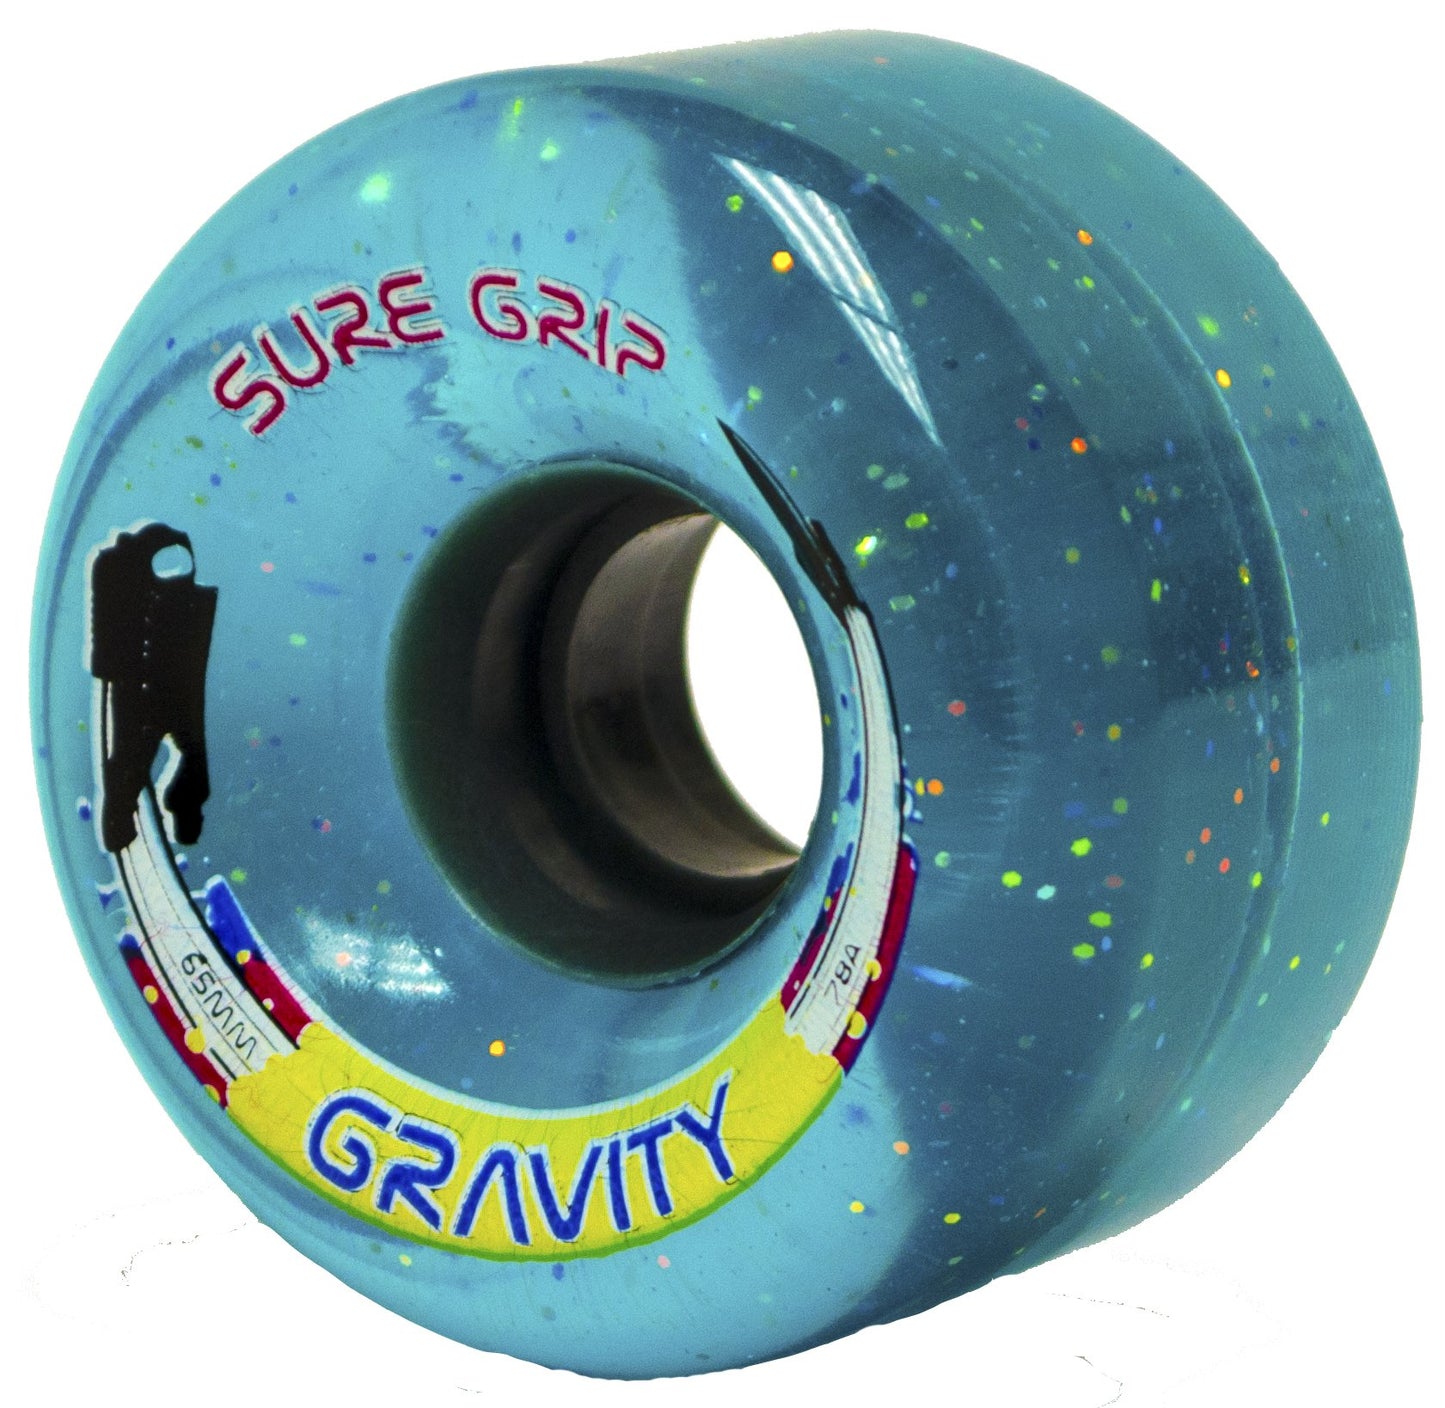 Sure-Grip Gravity Glitter Roller Skate Wheels Blue 62mm 78A